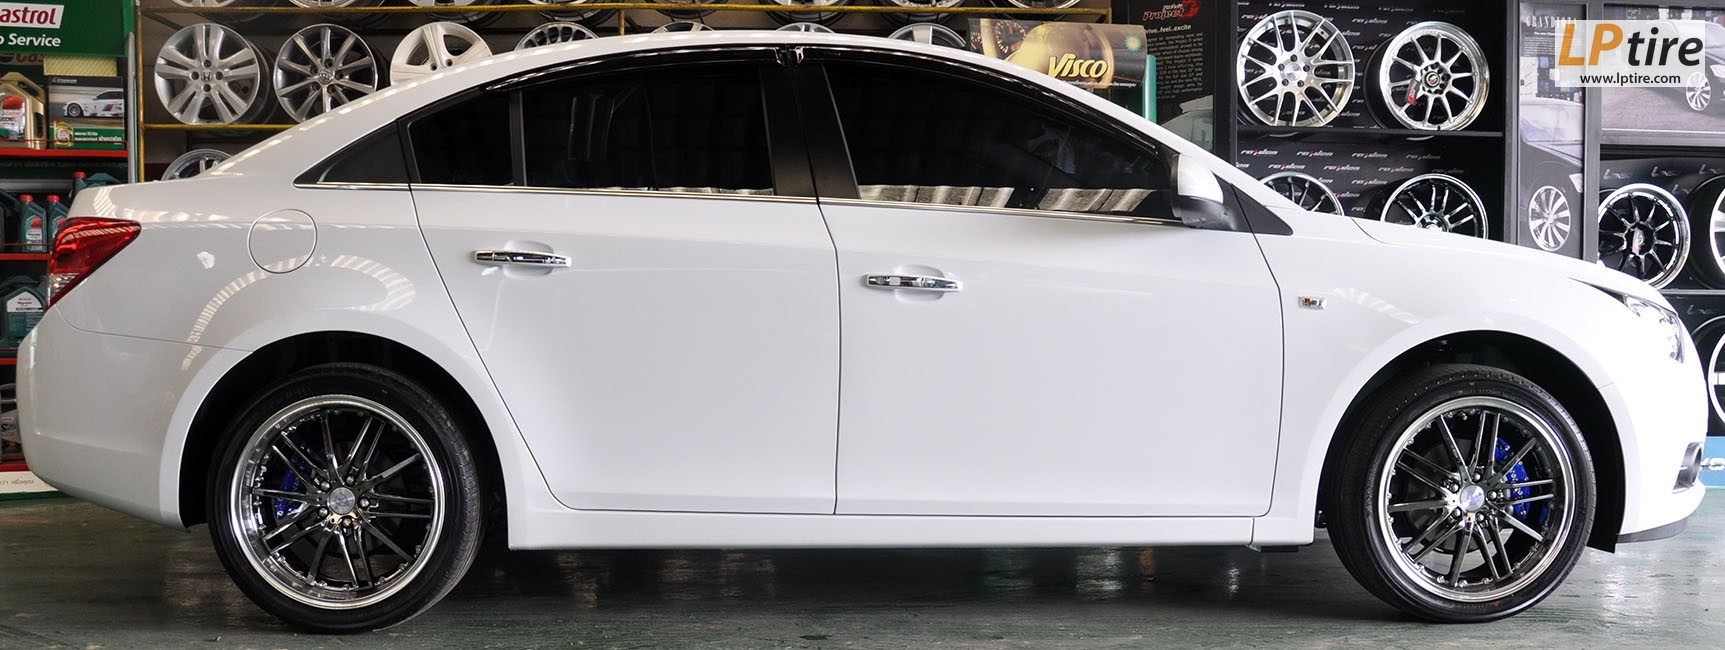 Chevrolet Cruze + ล้อแม็ก Traffics VZ 18นิ้ว สี Black Chrome หน้าตื้น หลังลึก + ยาง YOKOHAMA V551 235/40-18